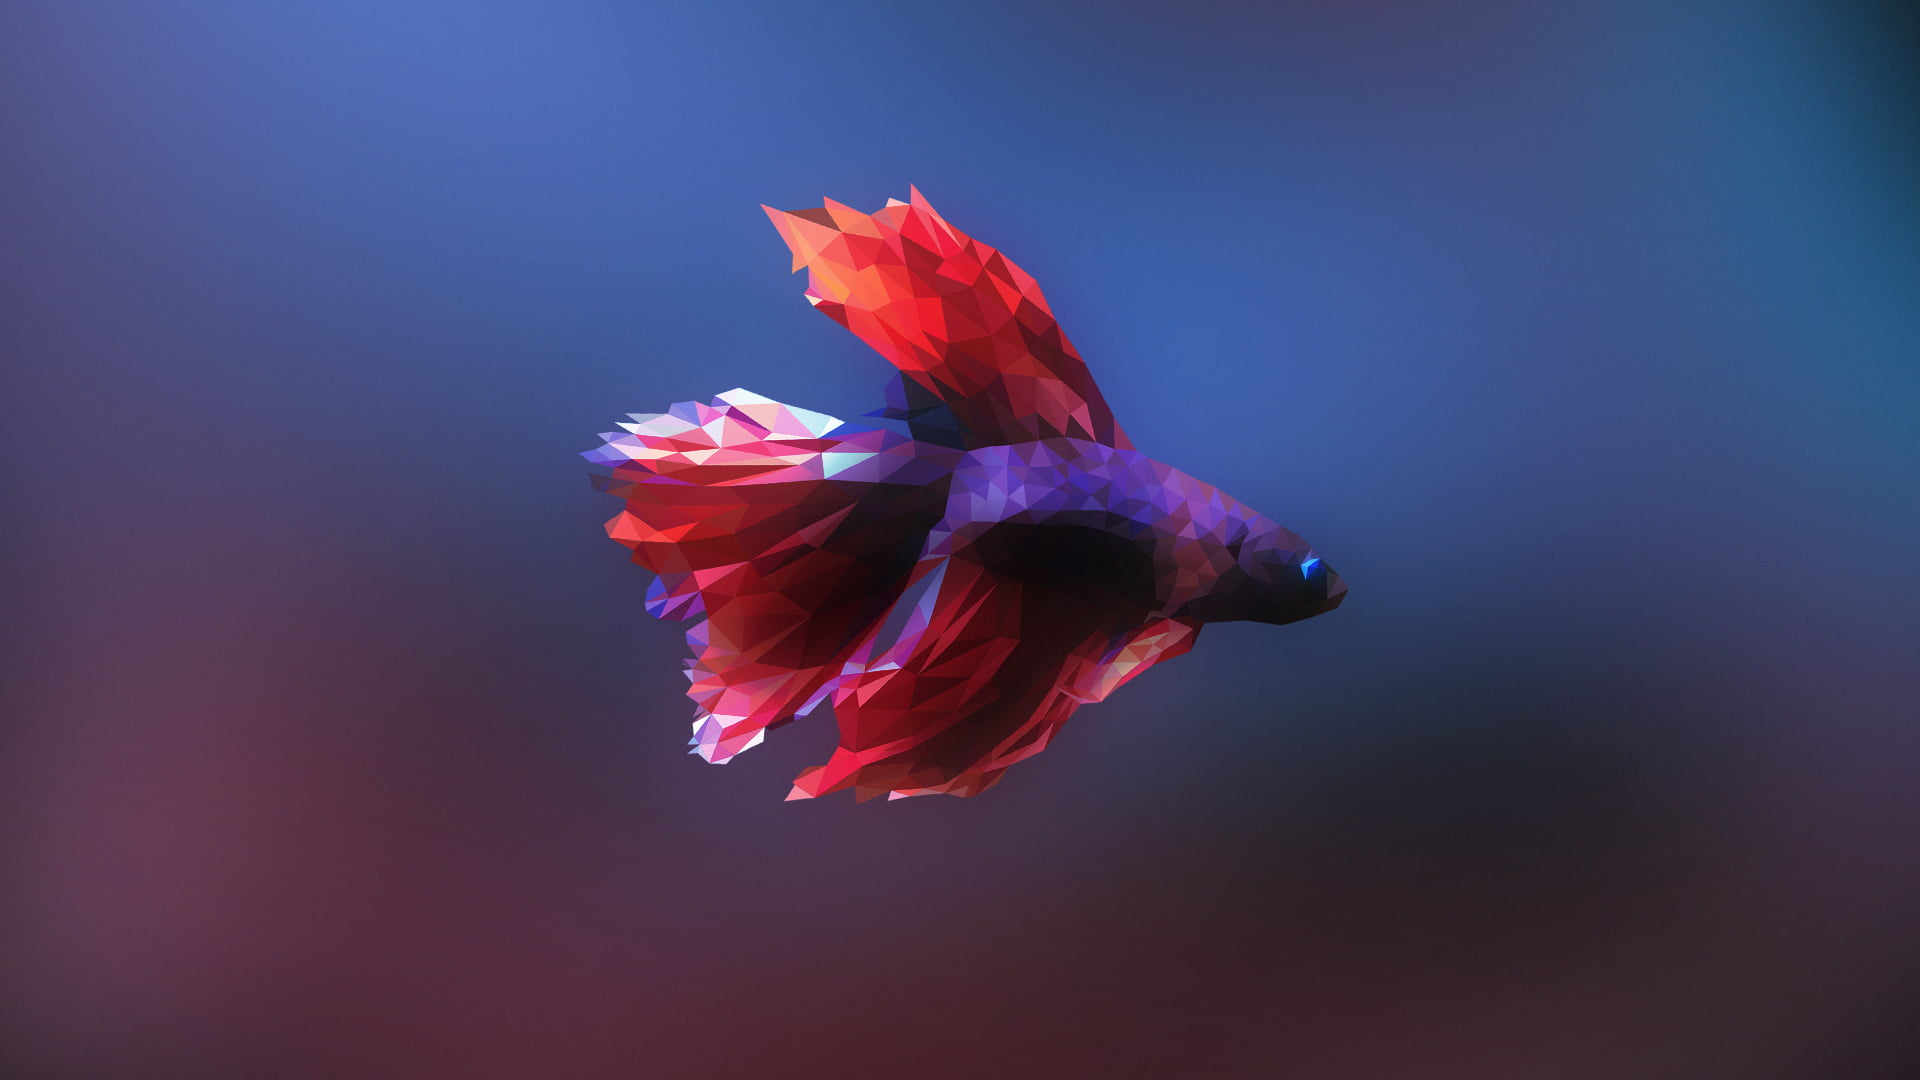 red and purple betta fish illustration, Siamese fighting fish